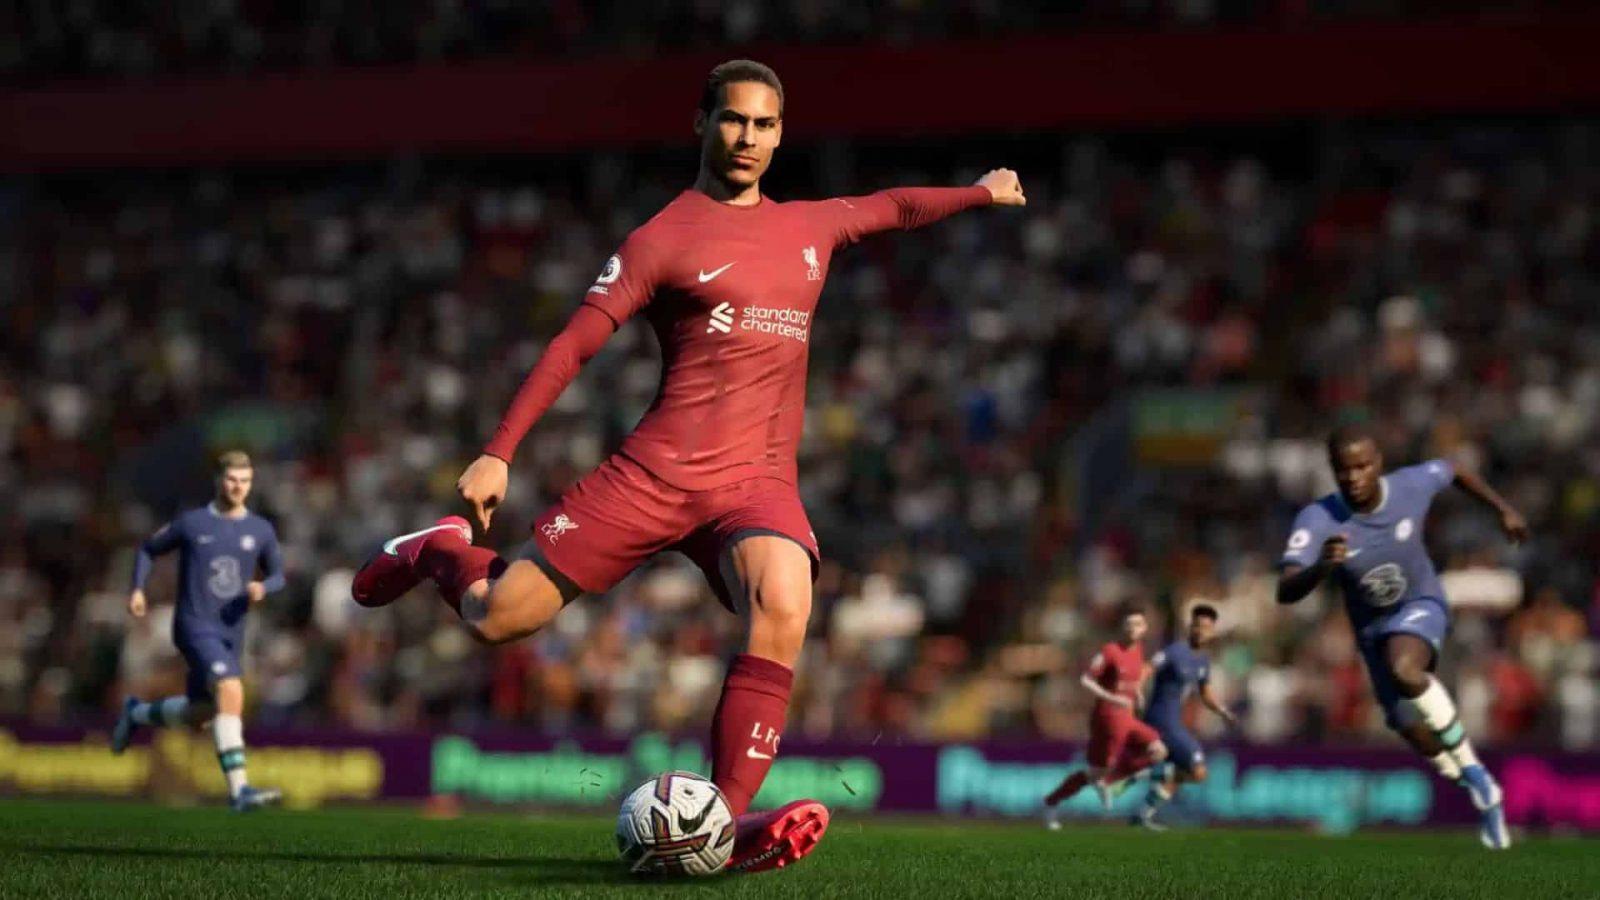 FIFA 23 ICON leak reveals Germany & Brazil legends - Dexerto